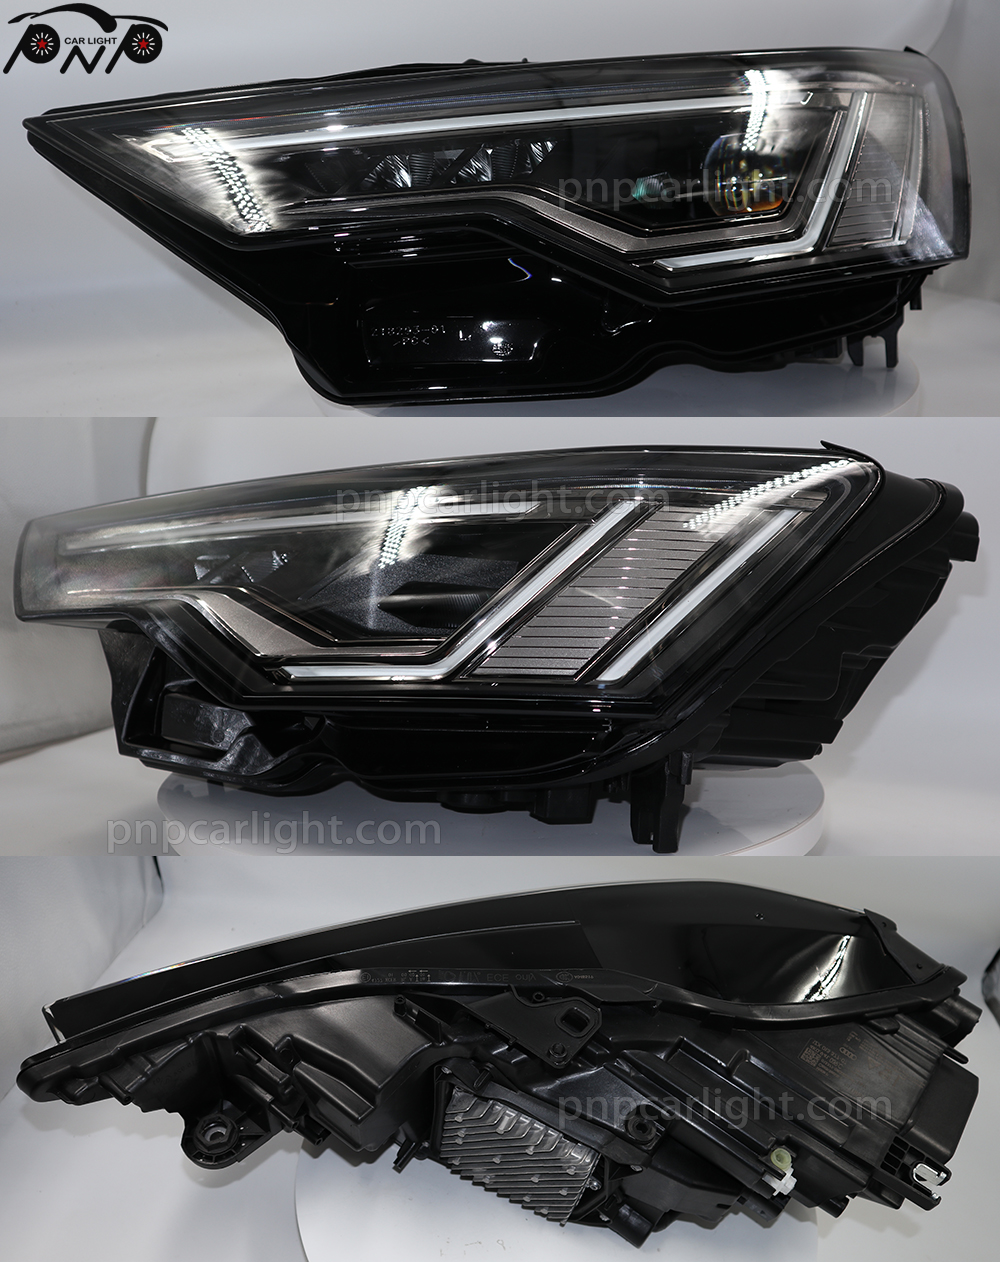 Audi A6 Matrix Led Headlights Price